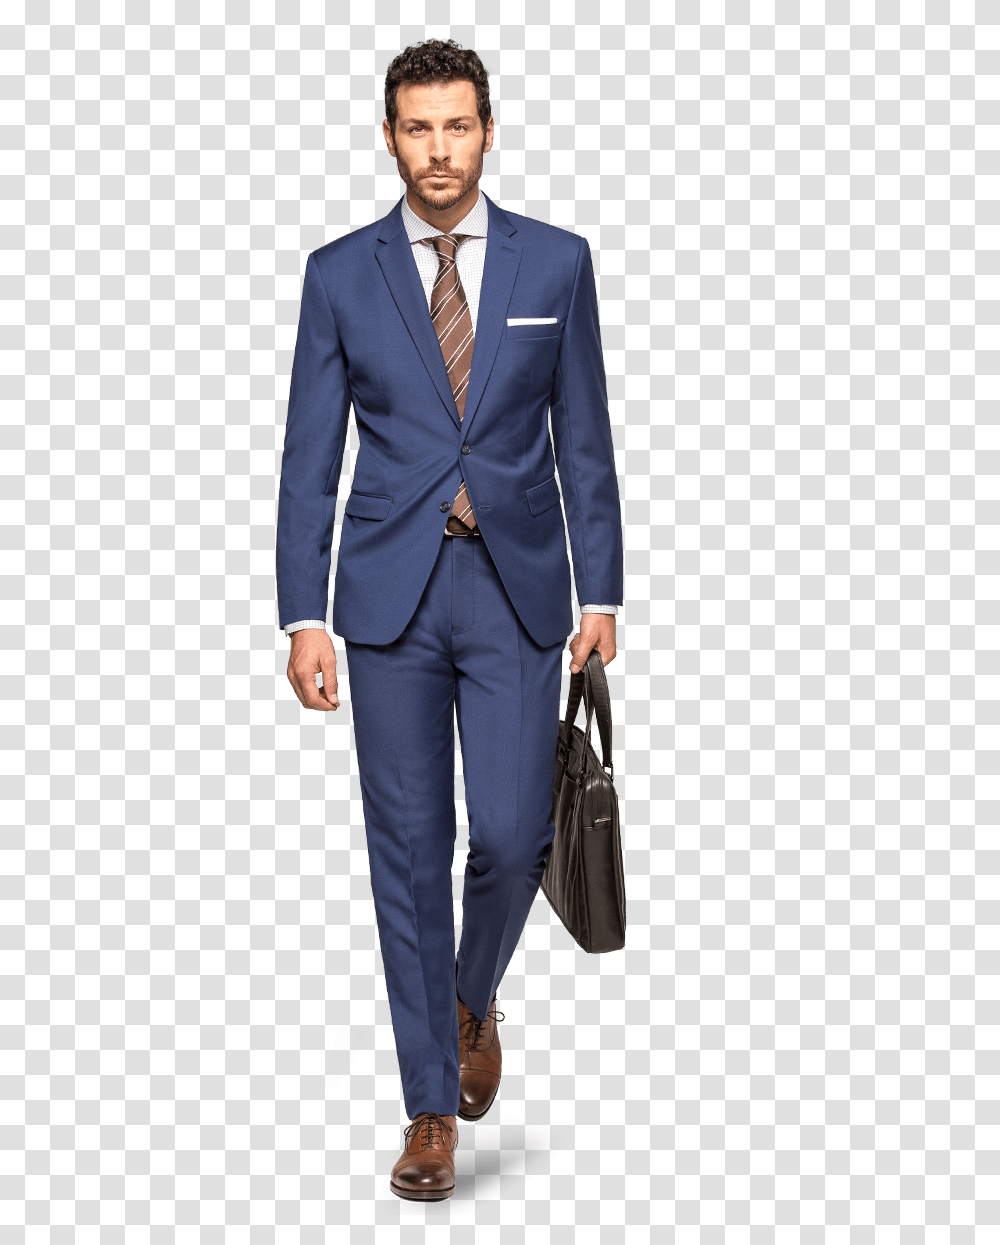 Hombre En Traje Cuerpo Completo, Apparel, Suit, Overcoat Transparent ...